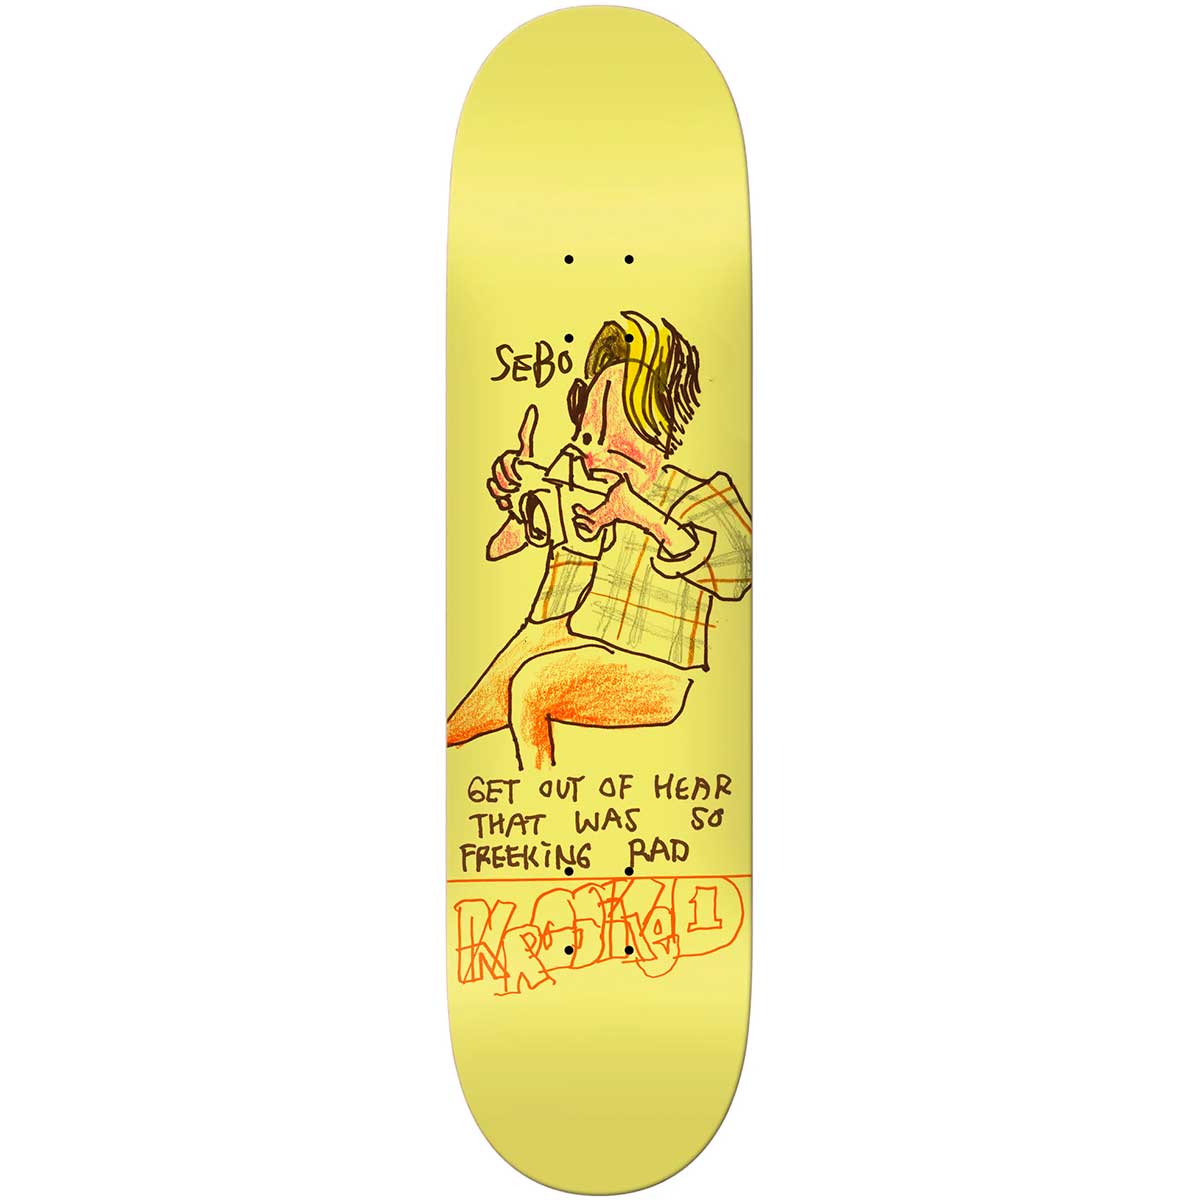 Krooked Sebo Walker Freaking Rad Skateboard Deck - | SoCal Skateshop